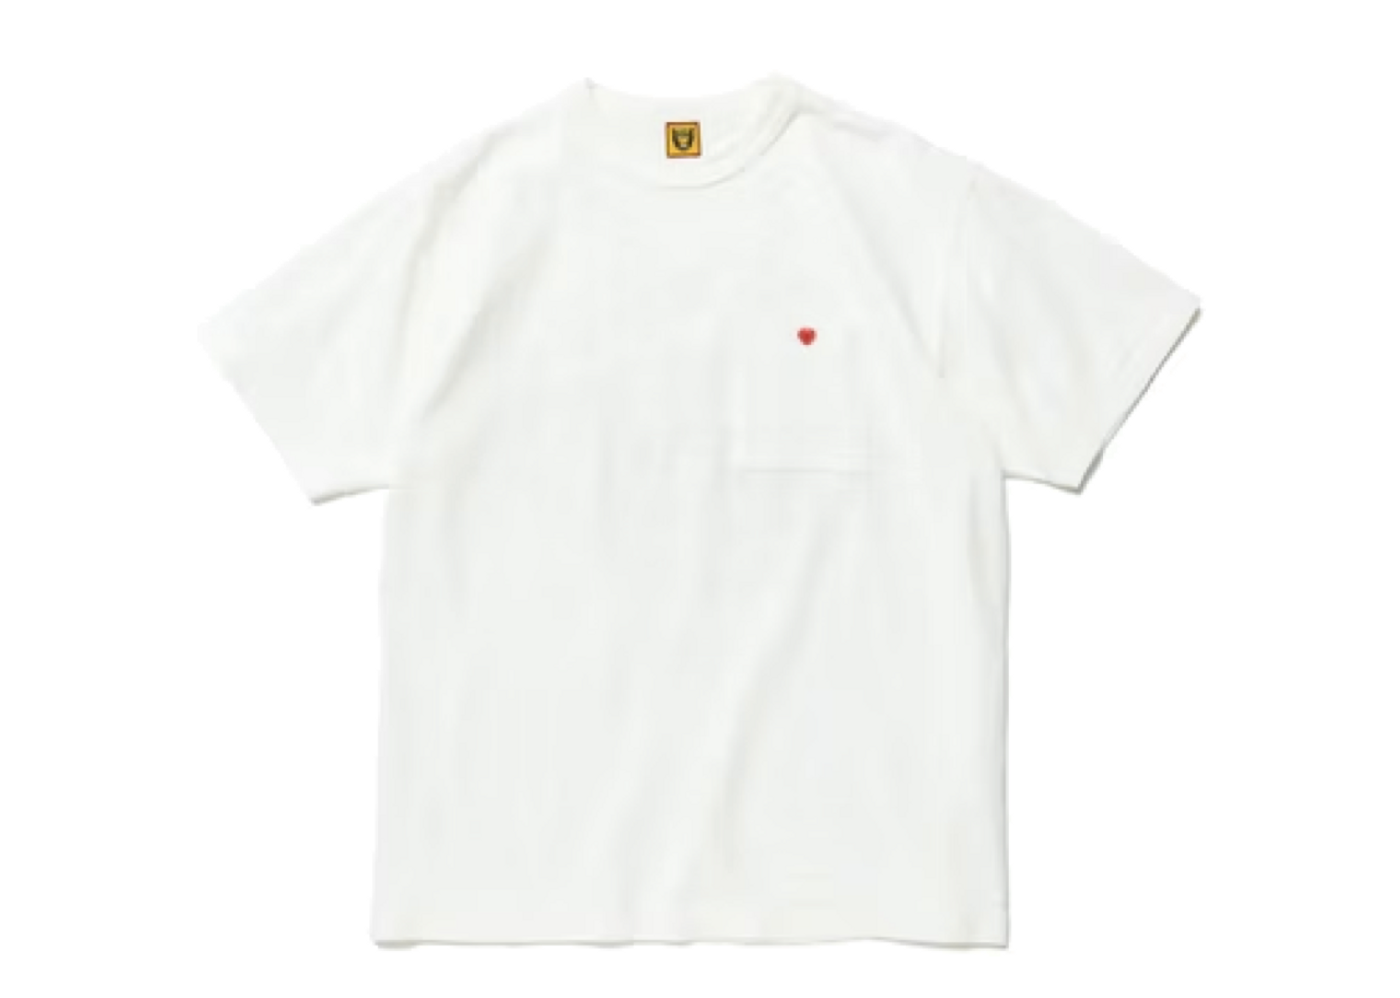 Human Made – Ningen-sei Graphic T-Shirt White - Size L